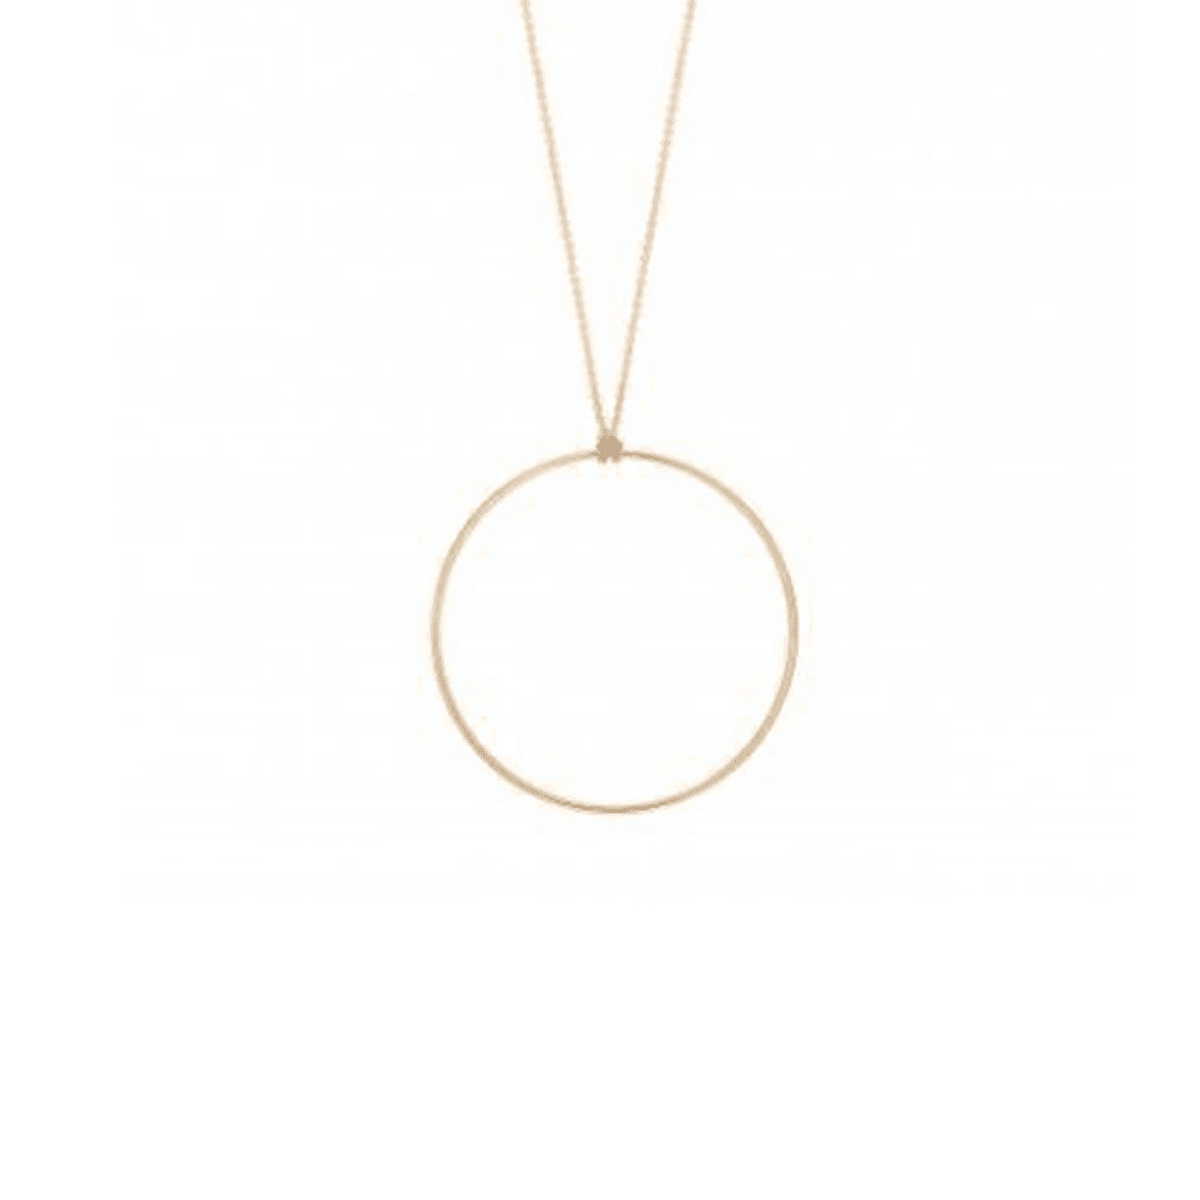 Minimal 18k Gold Plated handmade-in-spain circular pendant chain - Tanzire